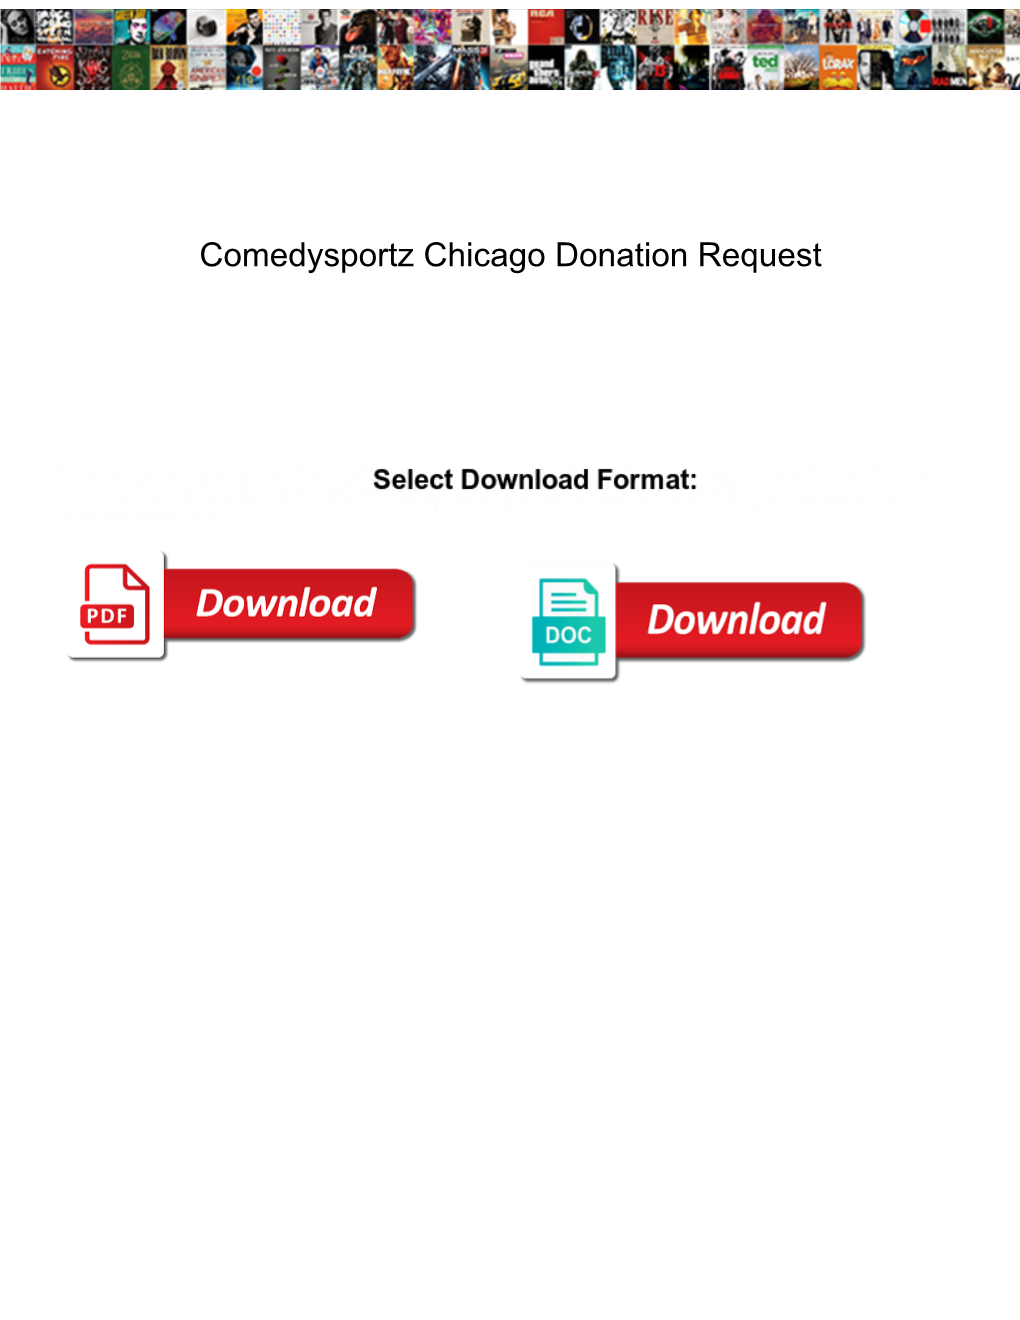 Comedysportz Chicago Donation Request